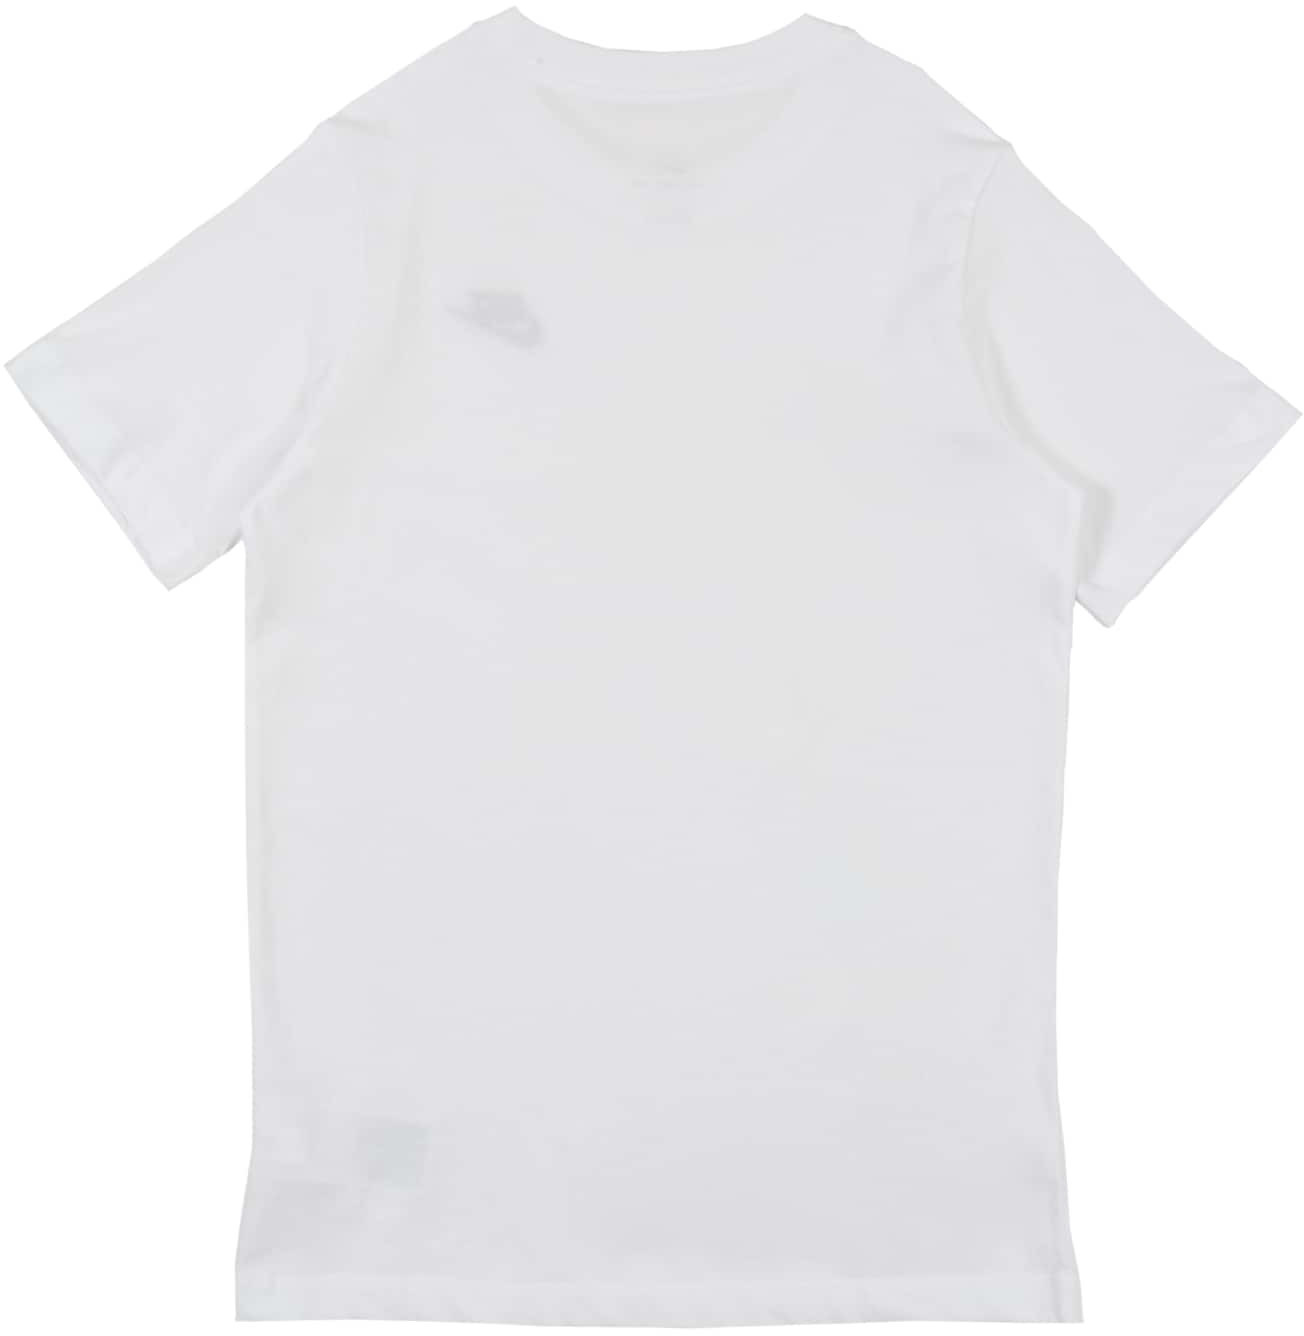 Tshirt (AR5254) white/white | Preisvergleich Kids\' Older € Sportswear Nike ab 15,99 bei